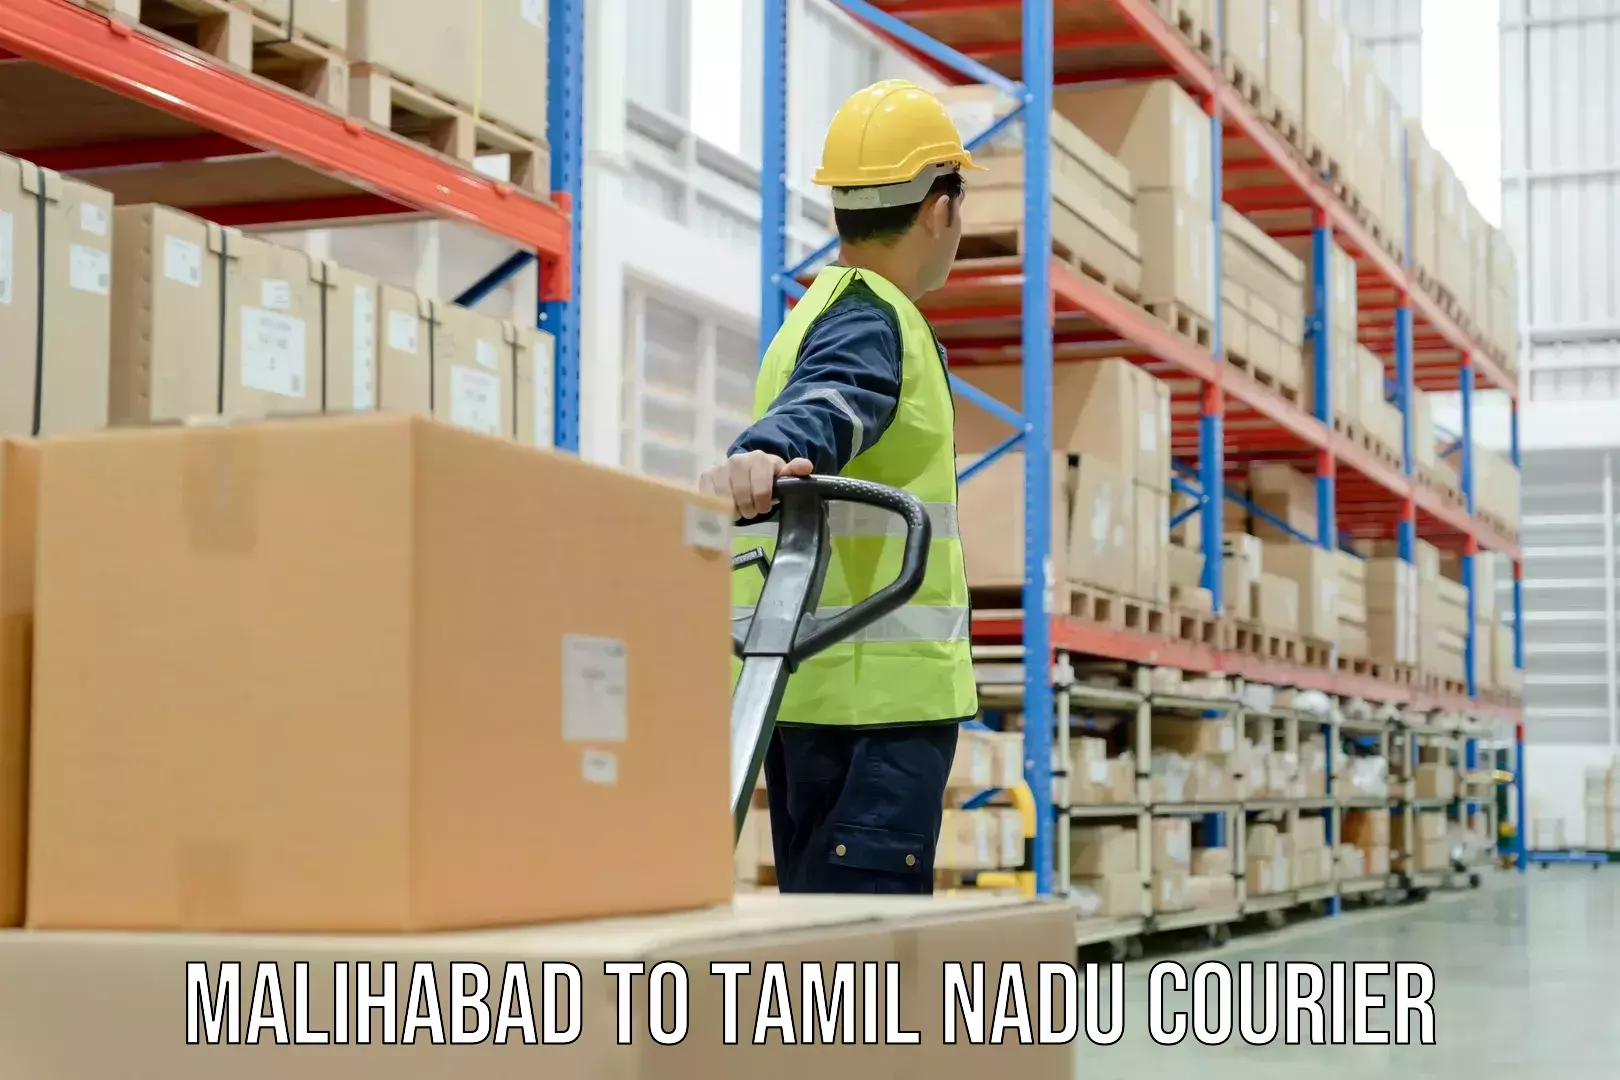 Digital courier platforms Malihabad to Chennai Port